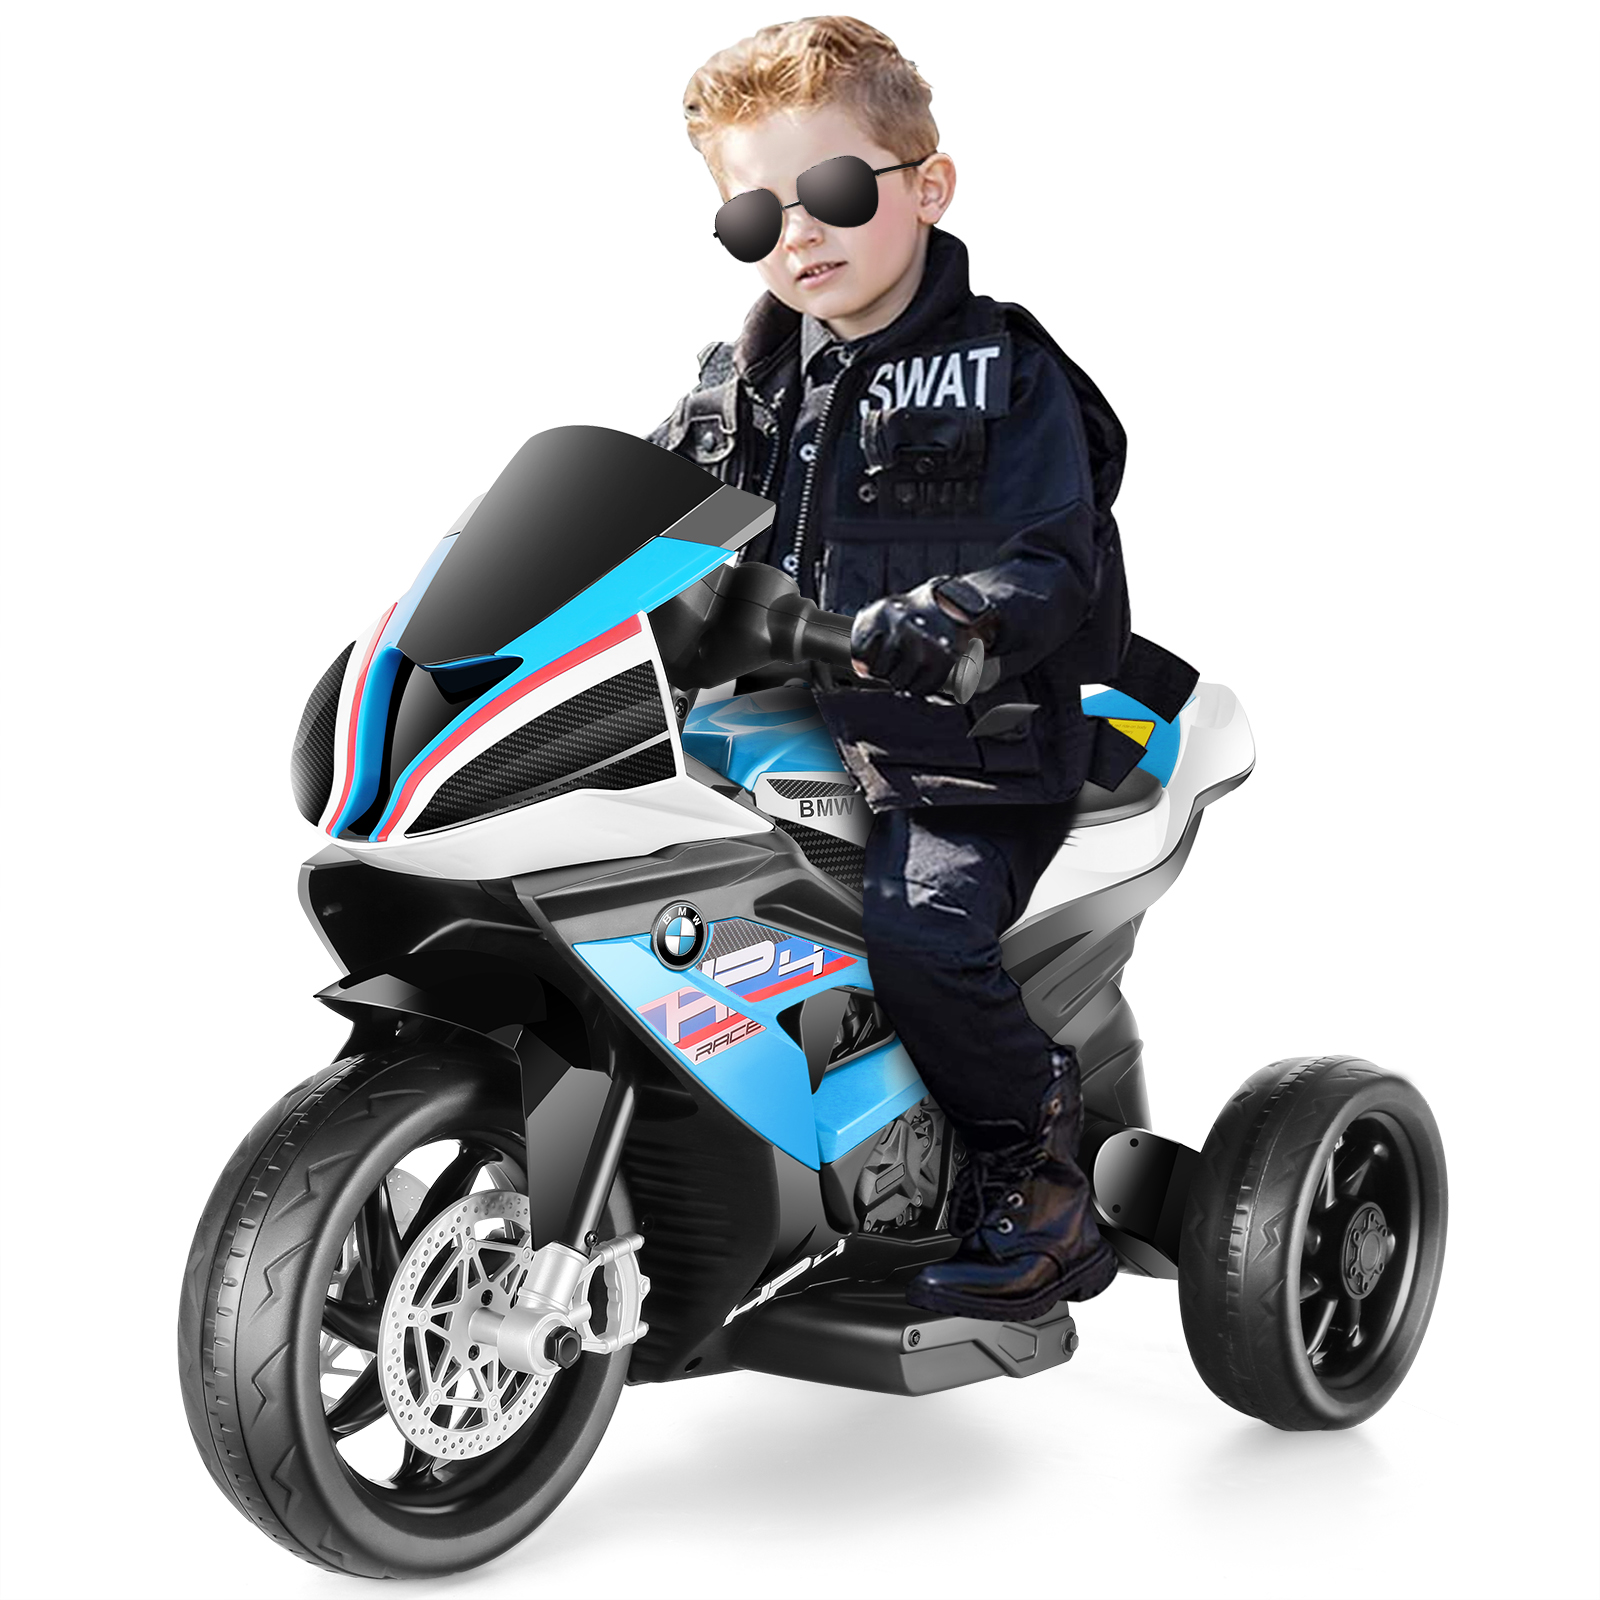 Funcid 12V Kids Ride on Motorcycle BMW Licensed